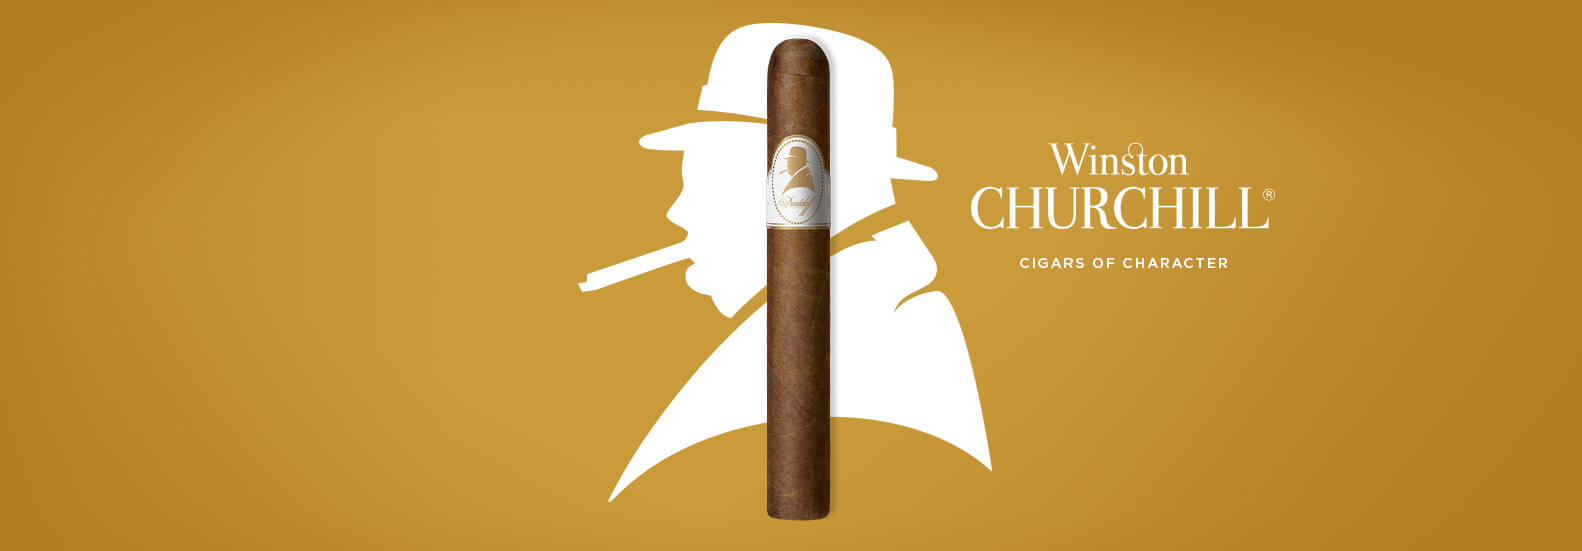 Winston Churchill Original Series Petit Panetela Cigar with Winston Churchill Logo in the Back